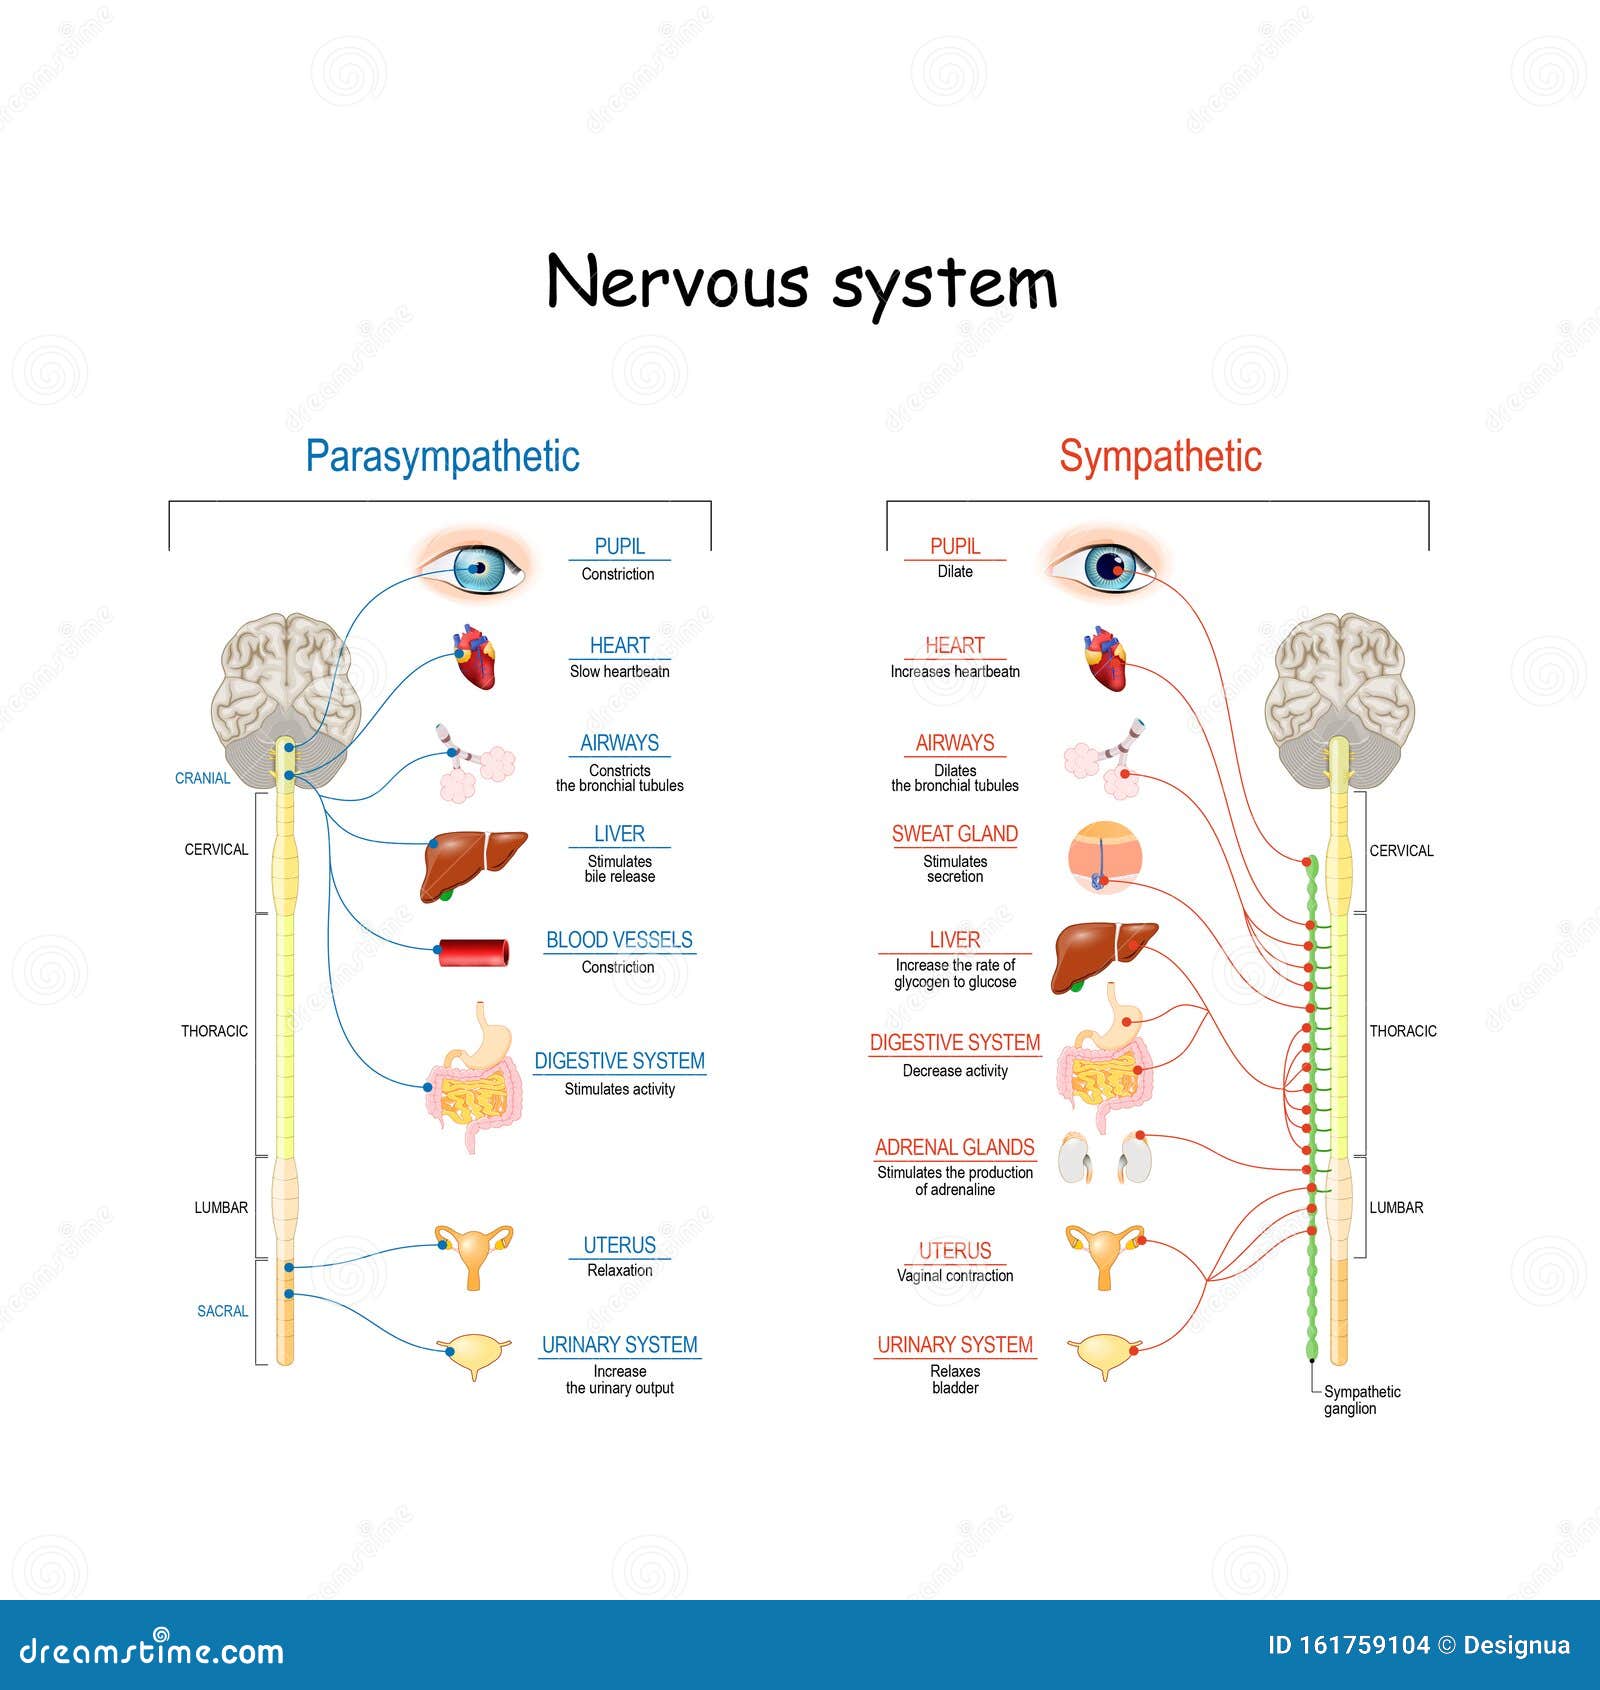 sympathetic and parasympathetic nervous system. difference